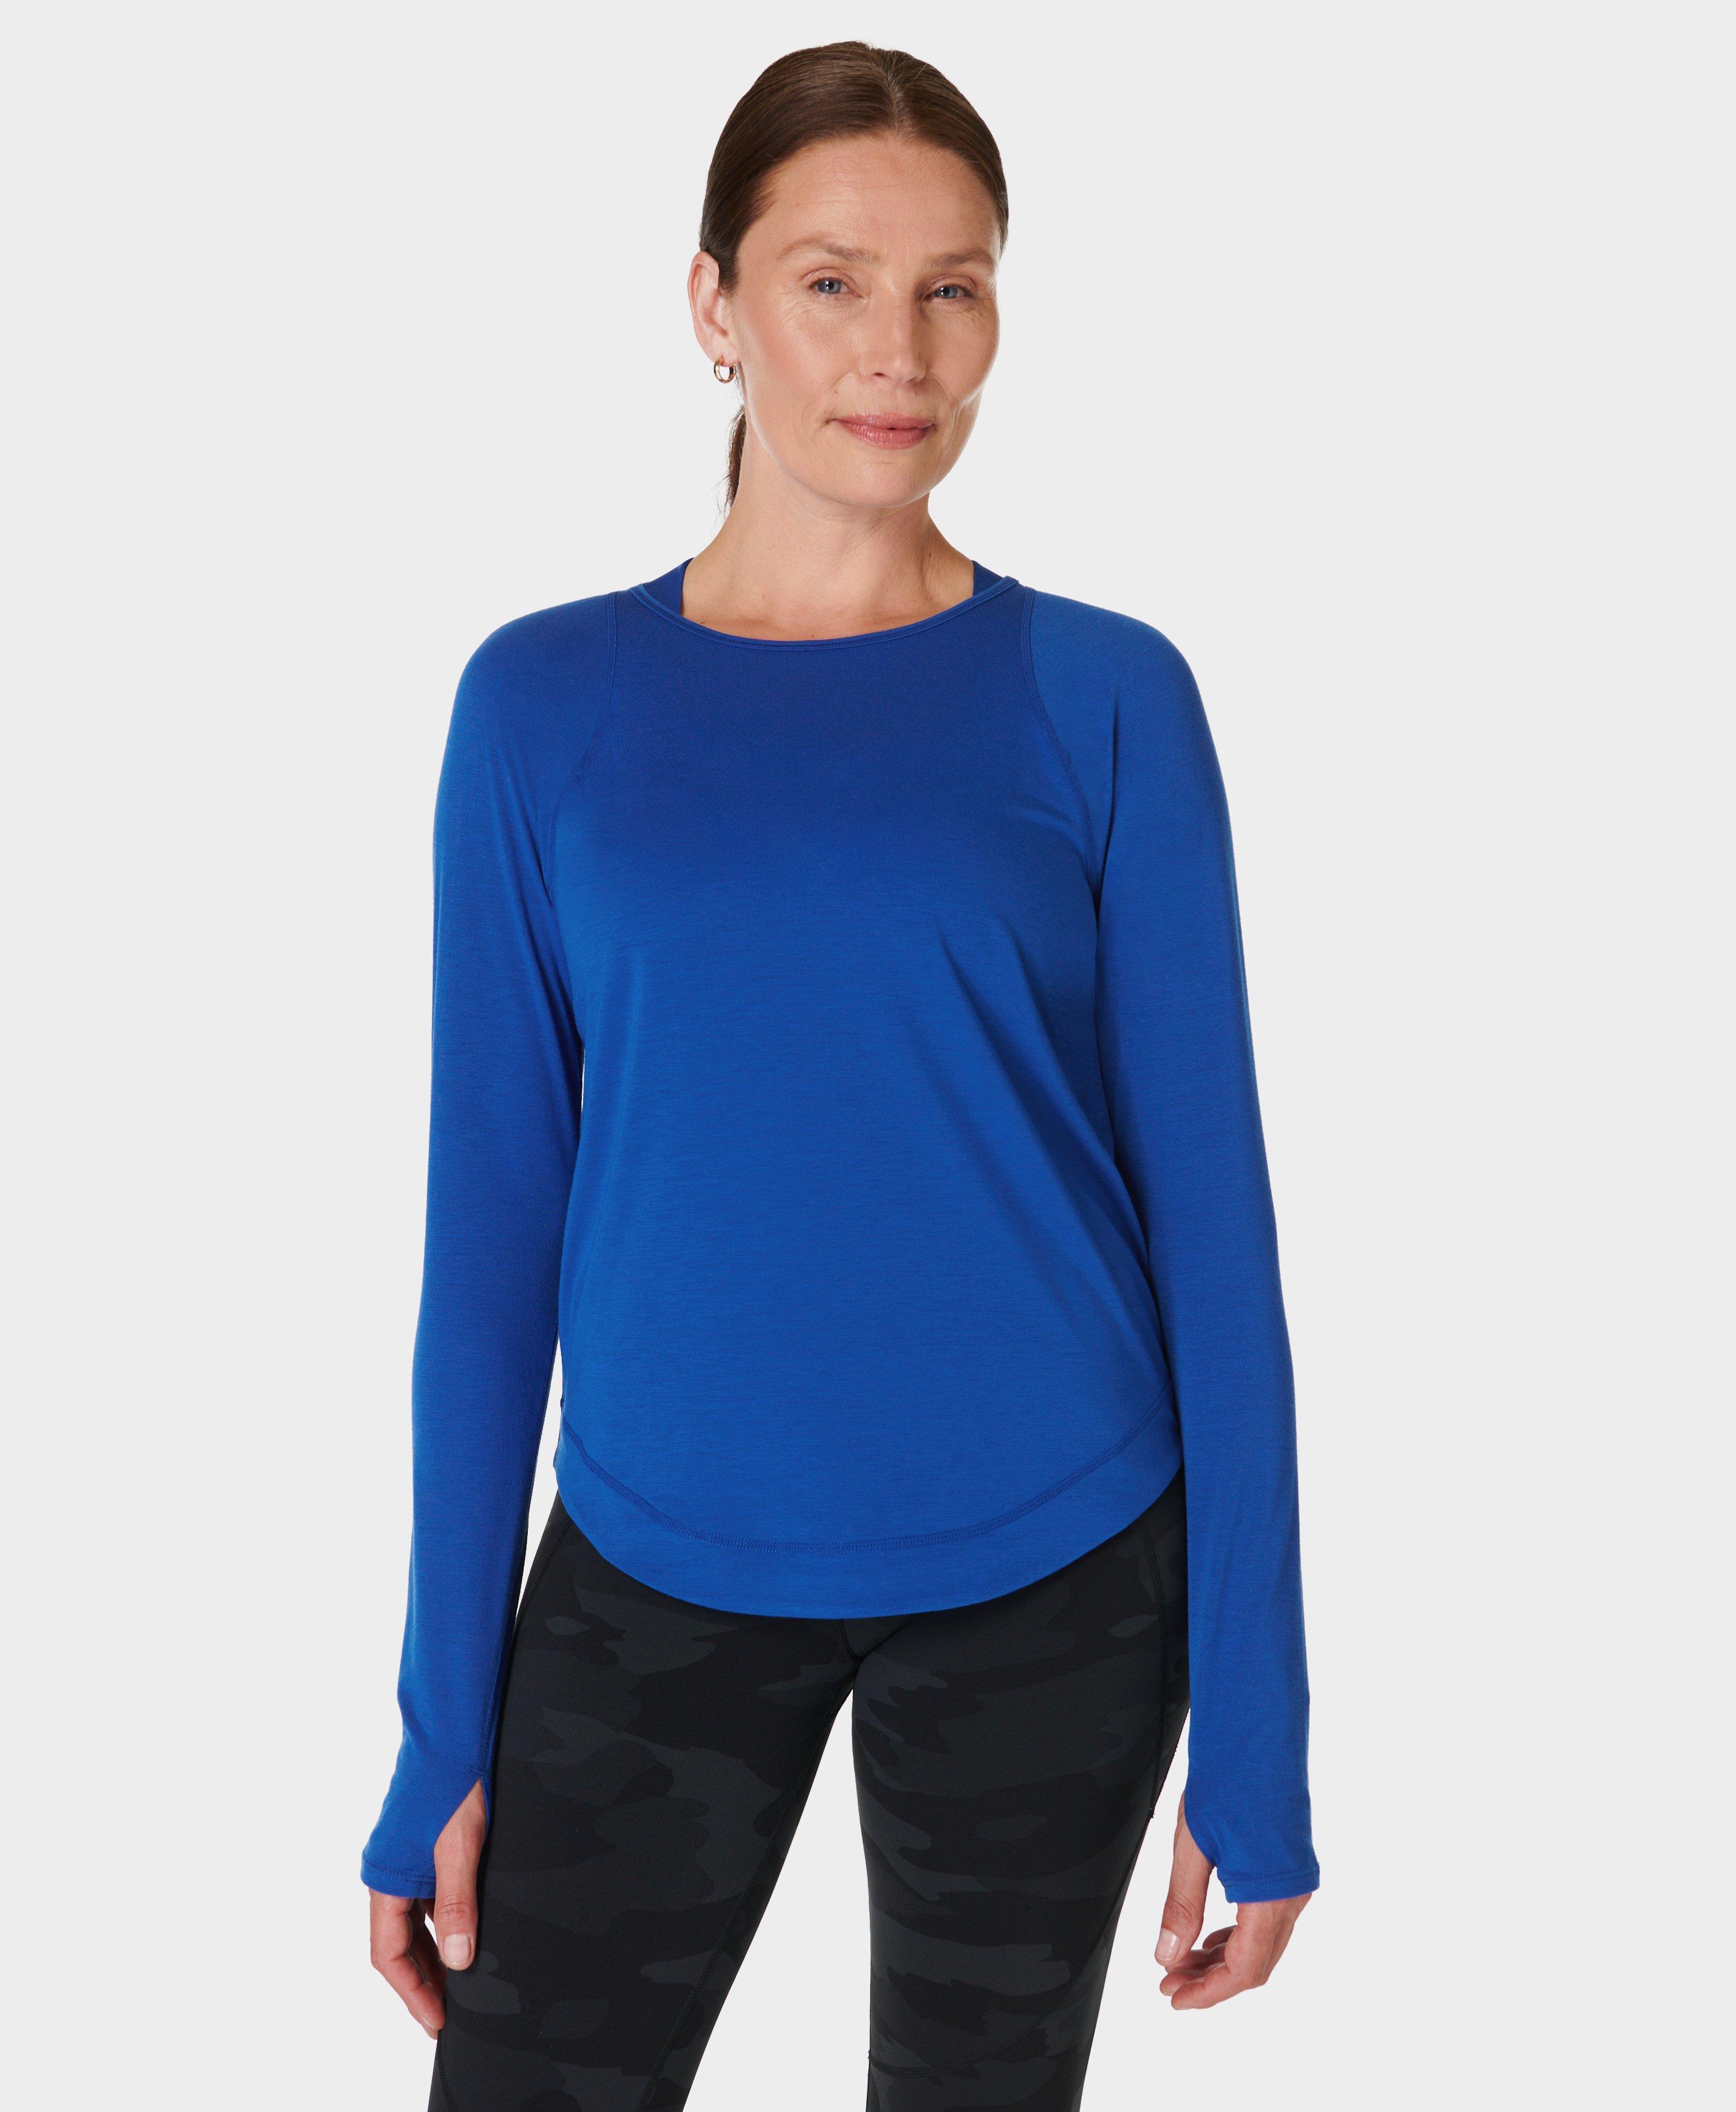 Women's Long Sleeve Gym Tops & Sweatshirts